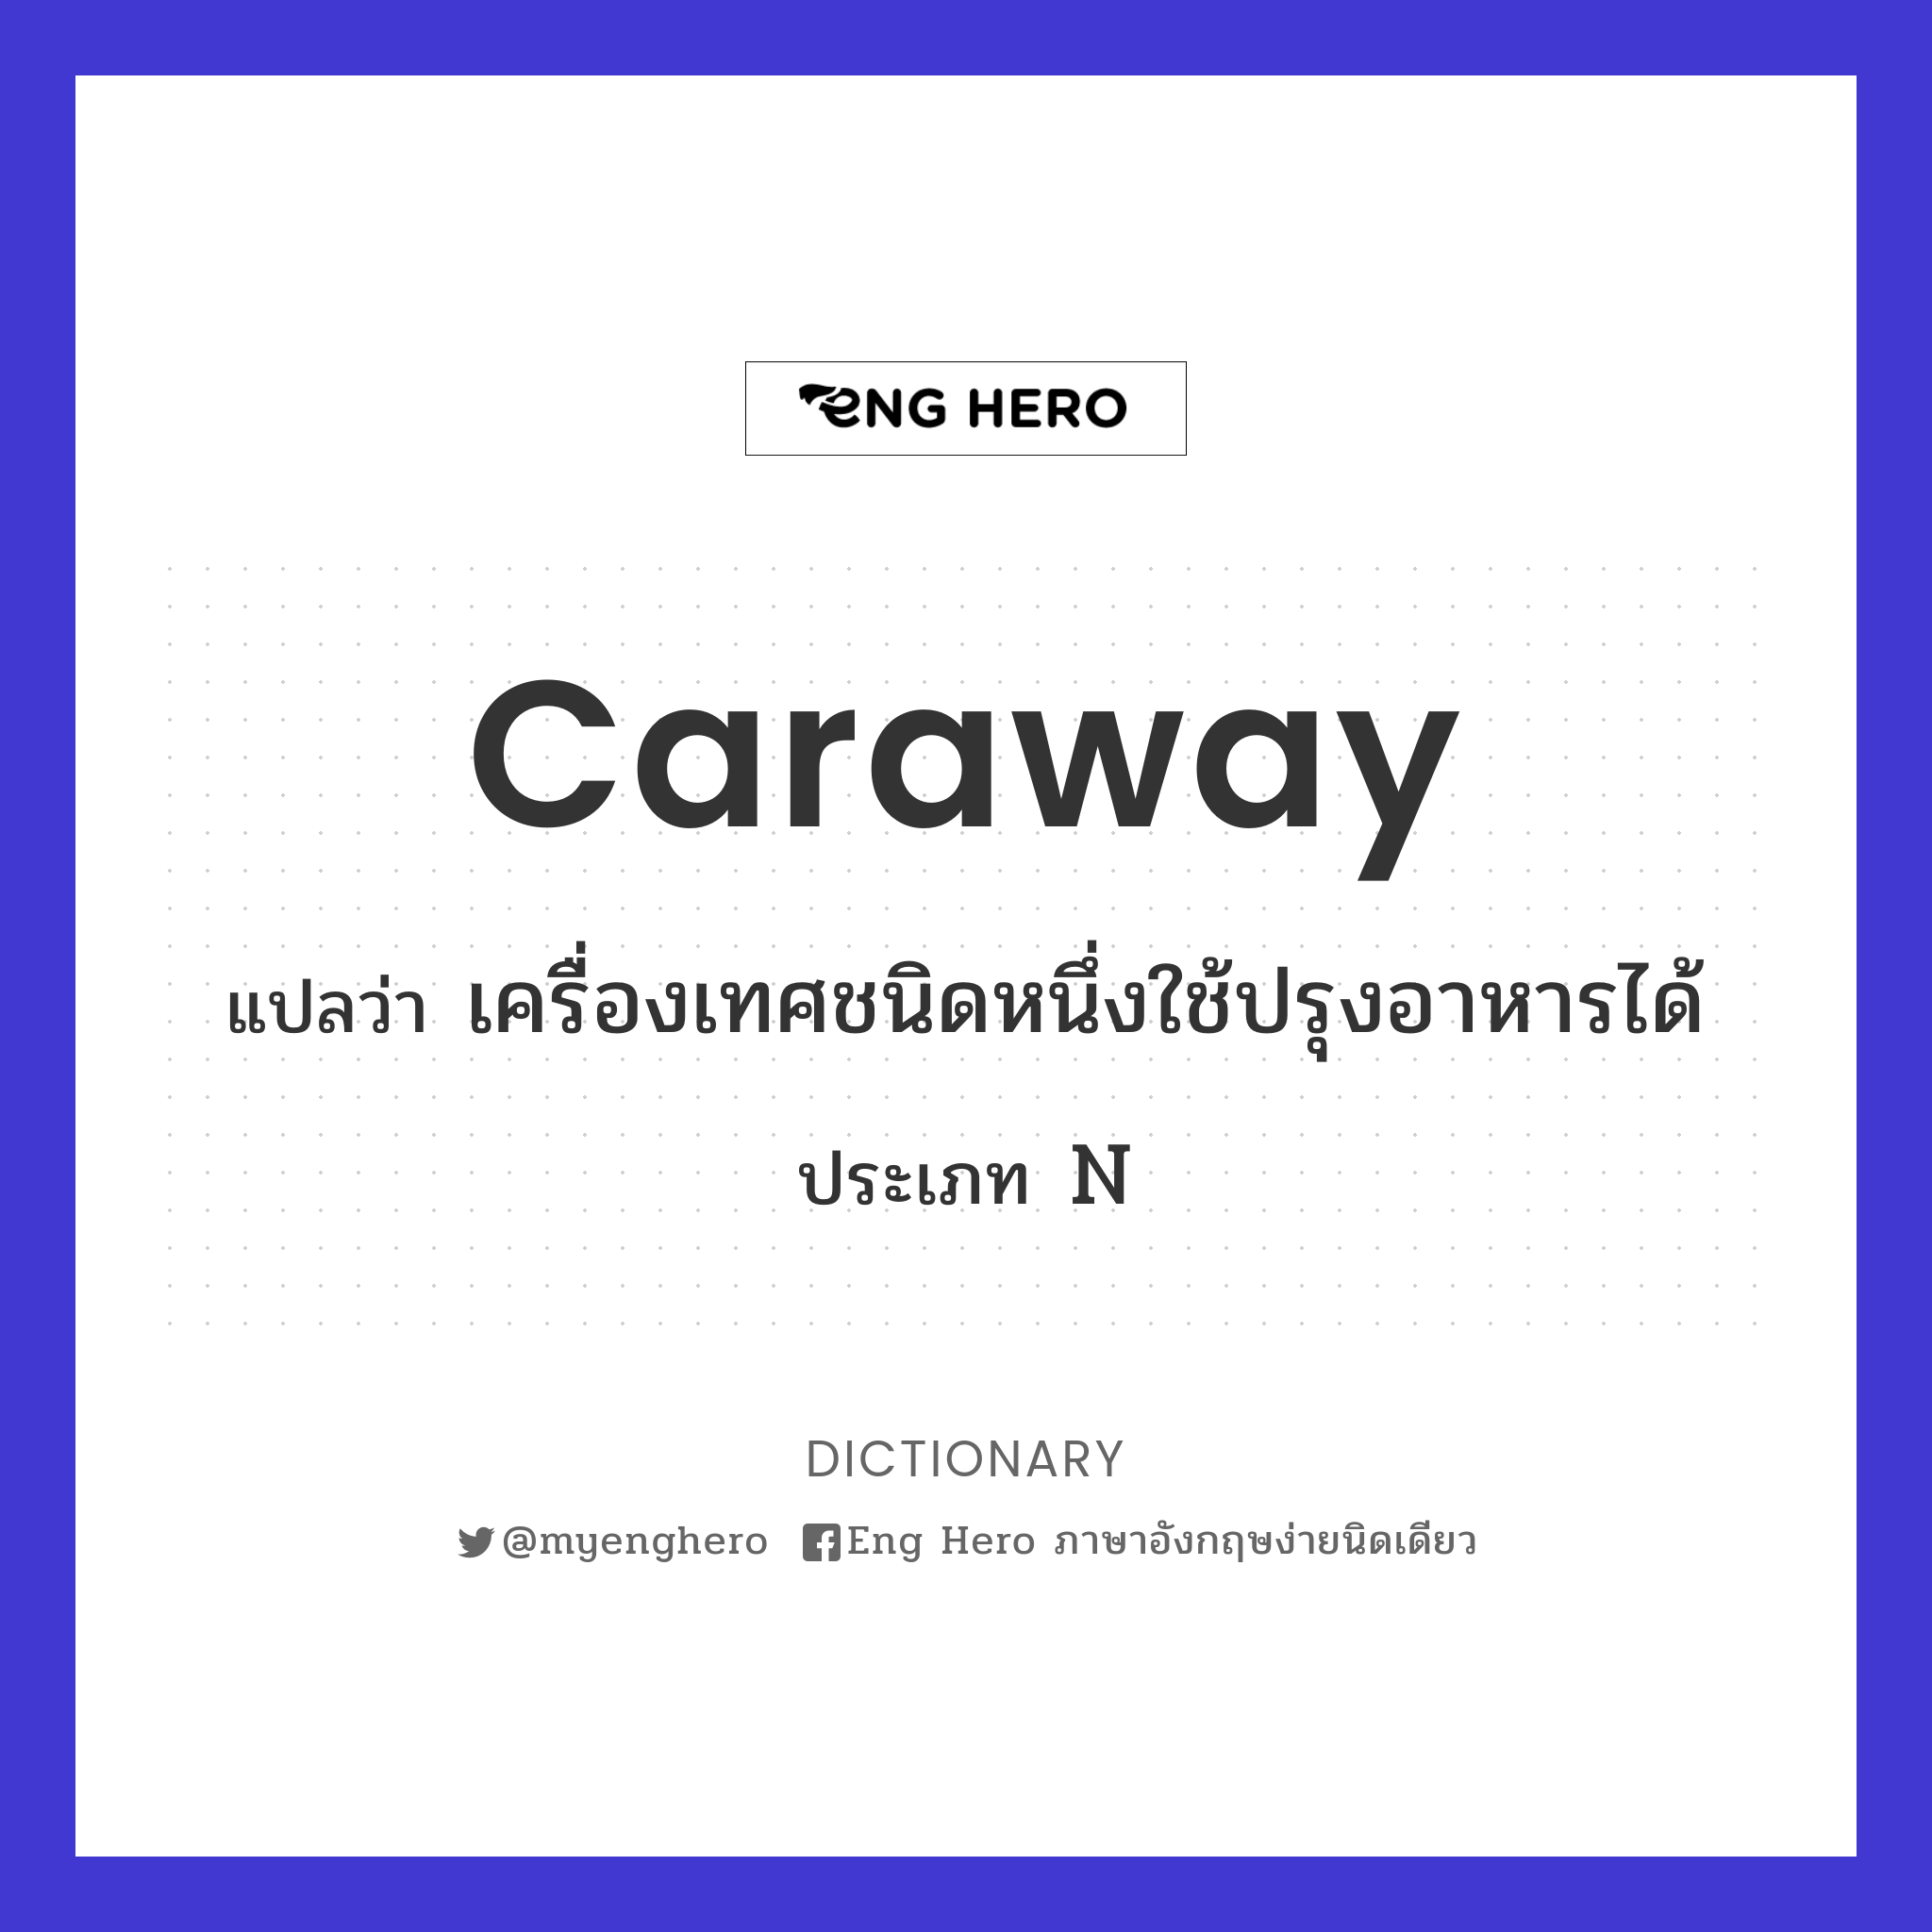 caraway